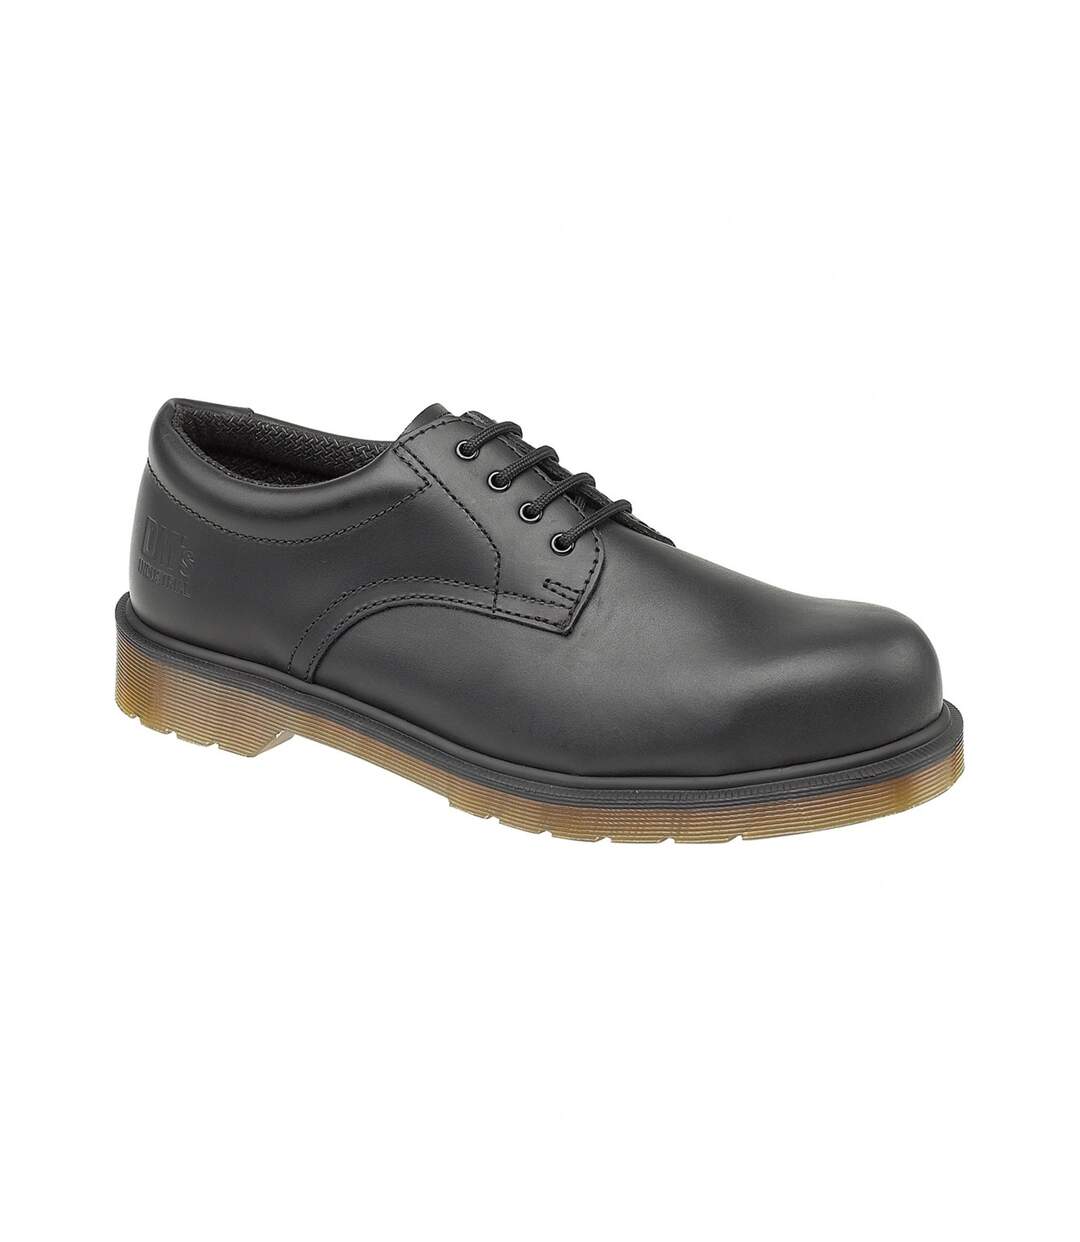 Dr Martens FS57 Lace-Up Shoe / Unisex Safety Shoes (Black) - UTFS868